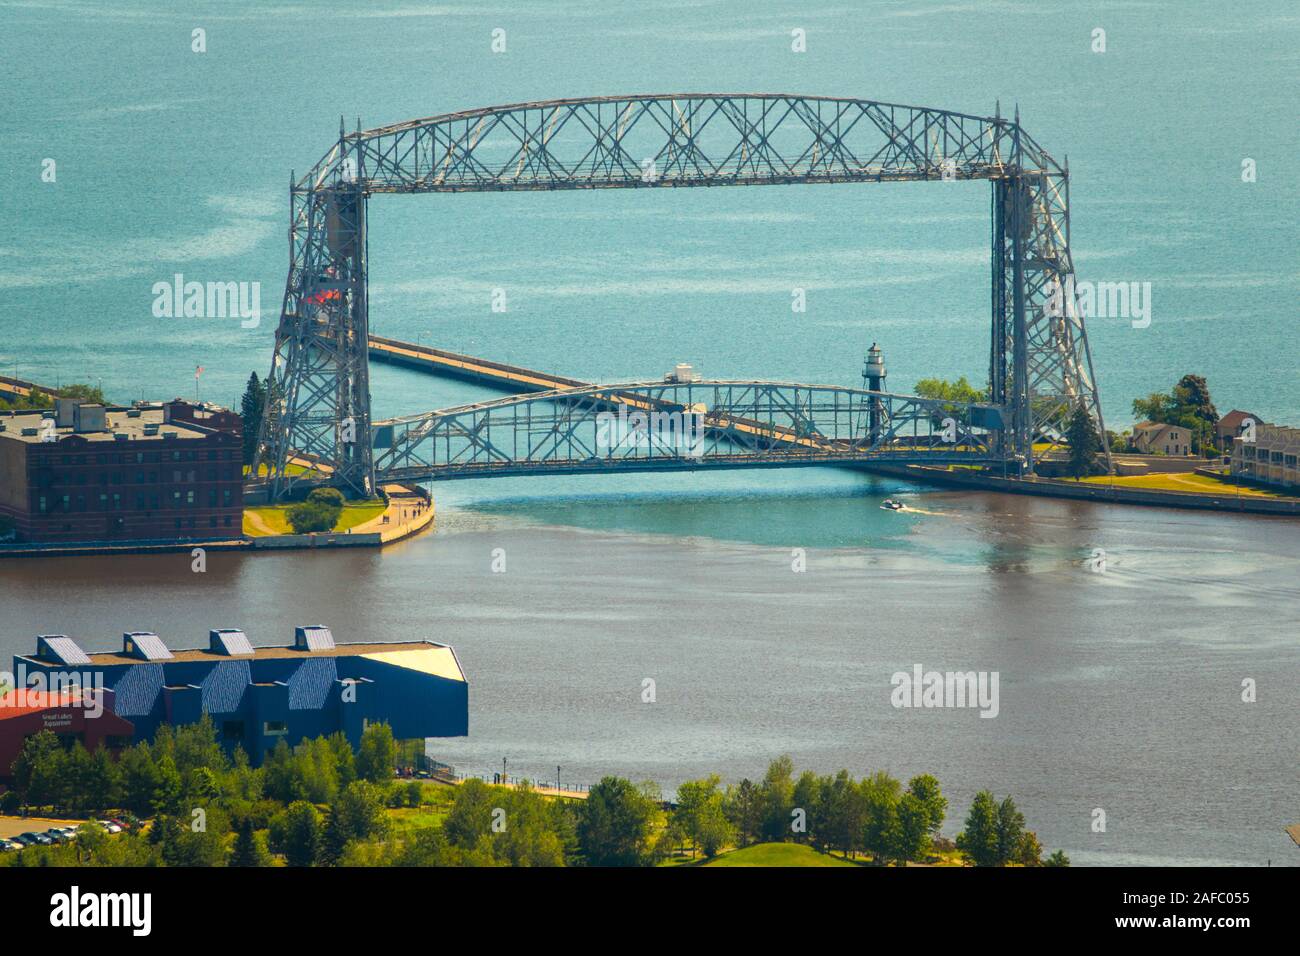 The iconic Aerial Lift Bridge in Duluth, Minnesota Stock Photo